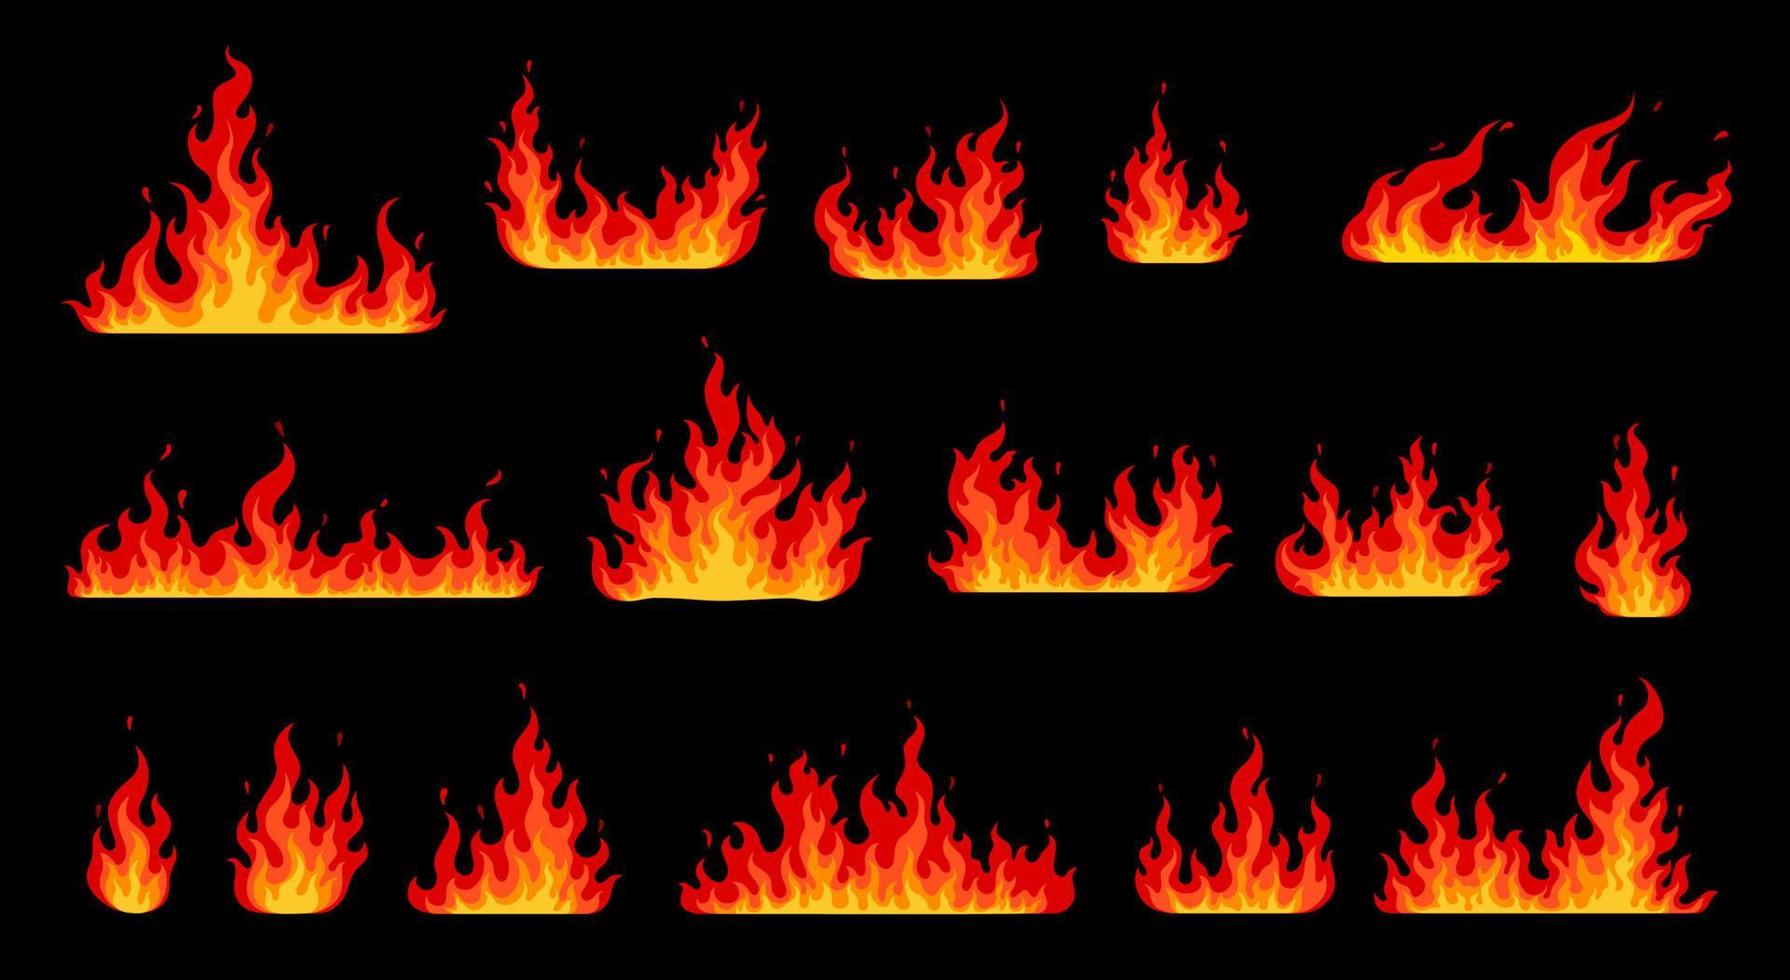 tekenfilm brand vlammen, vreugdevuur en brandend brandmuur vector